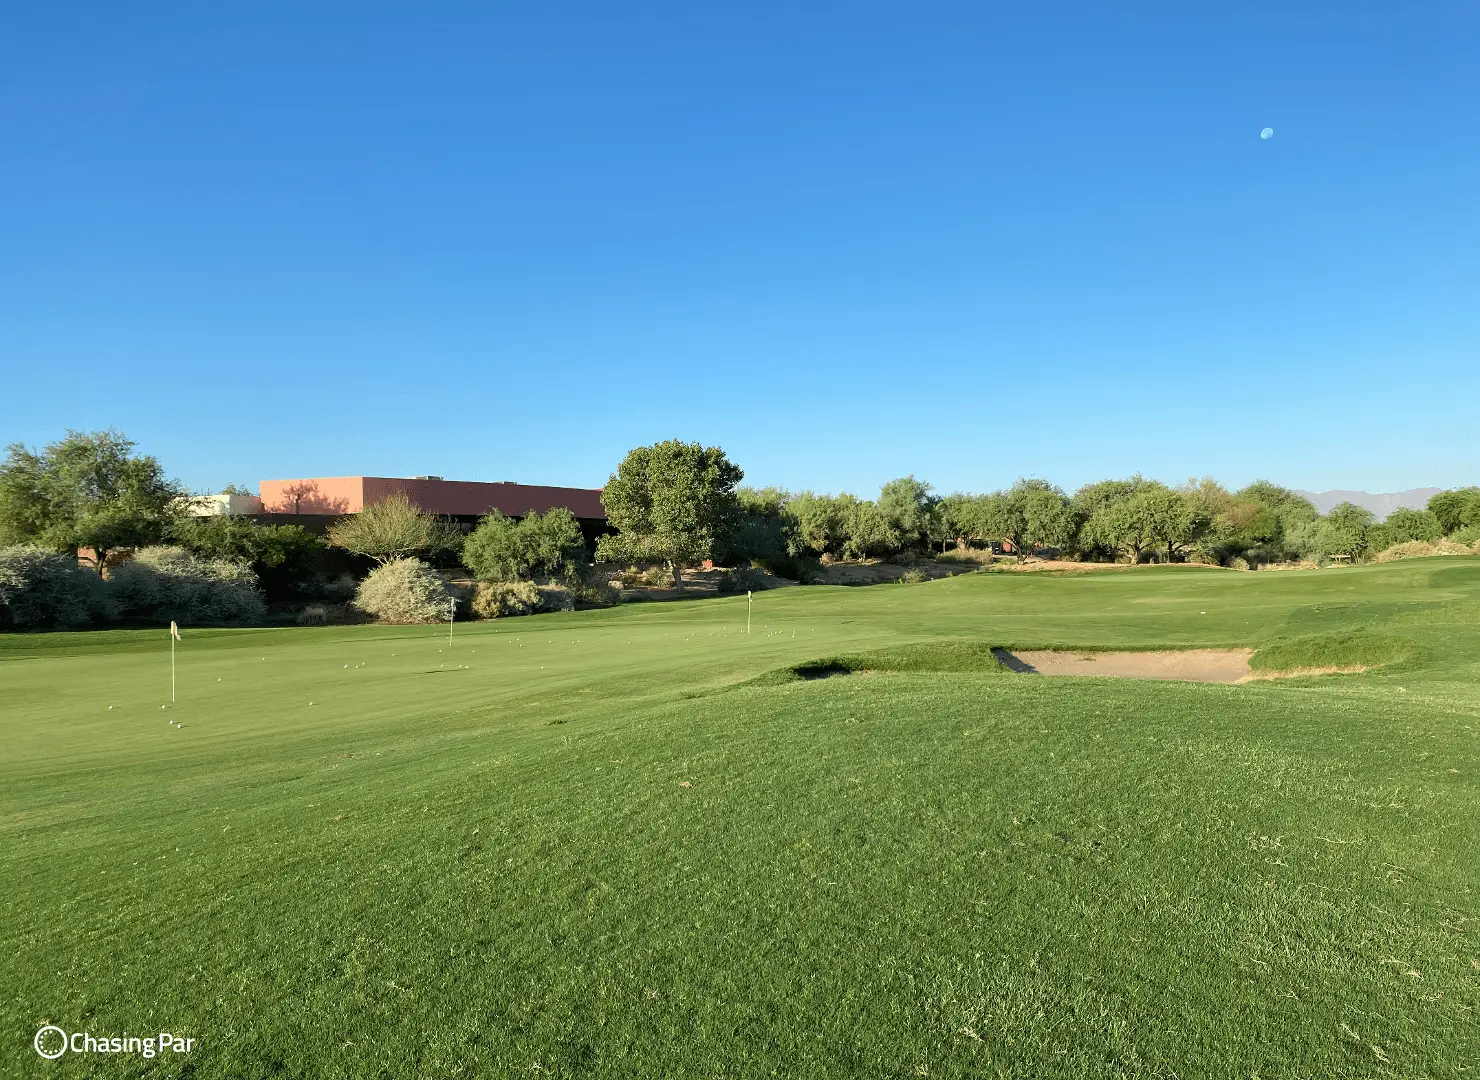 Michael Leonard Chasing Par at Whirlwind Arizona Top Golf Course